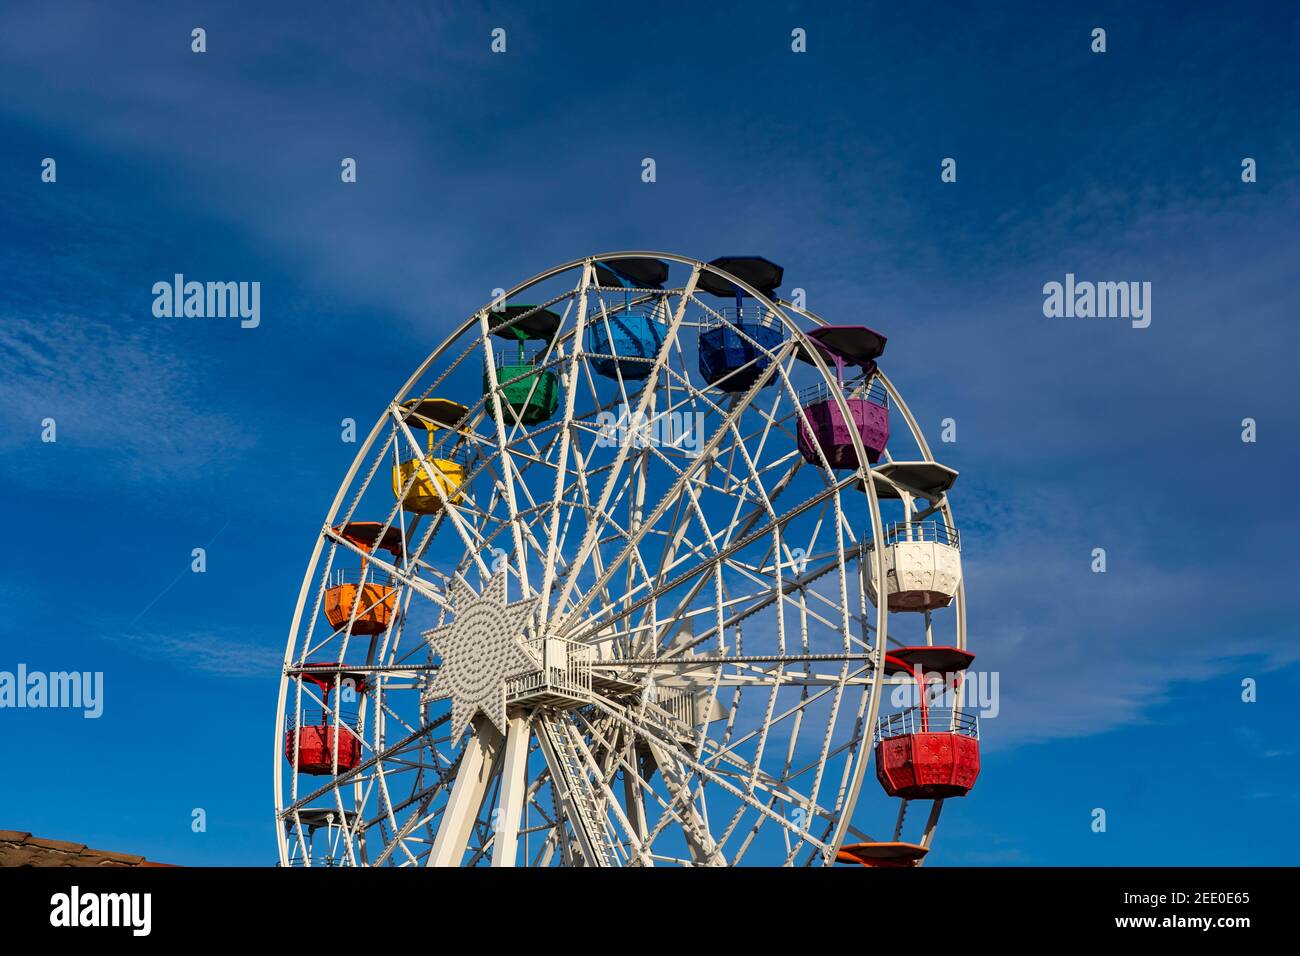 Ferris wheel in Parc d'atraccions Tibidabo, Barcelona, closed in February 2021 due to Covid-19, Coronavirus restrictions. Stock Photo